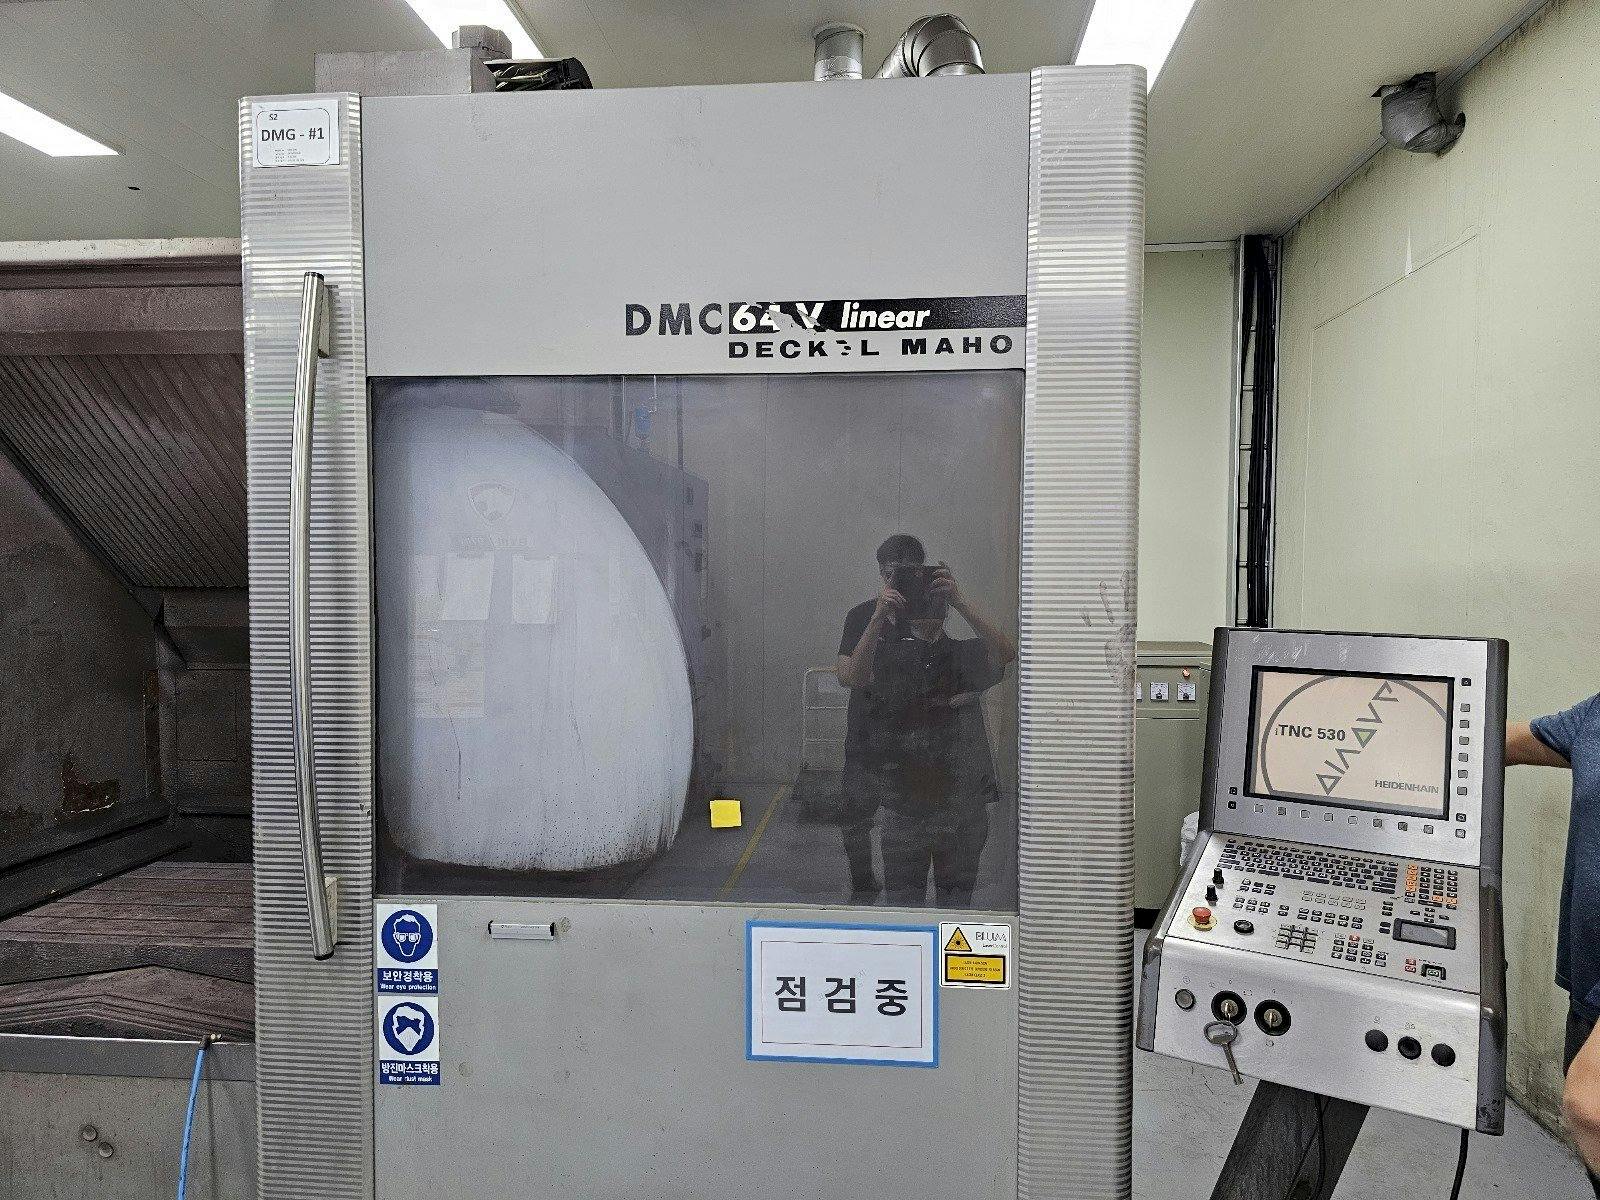 Čelní pohled  na DECKEL MAHO DMC 64V linear  stroj